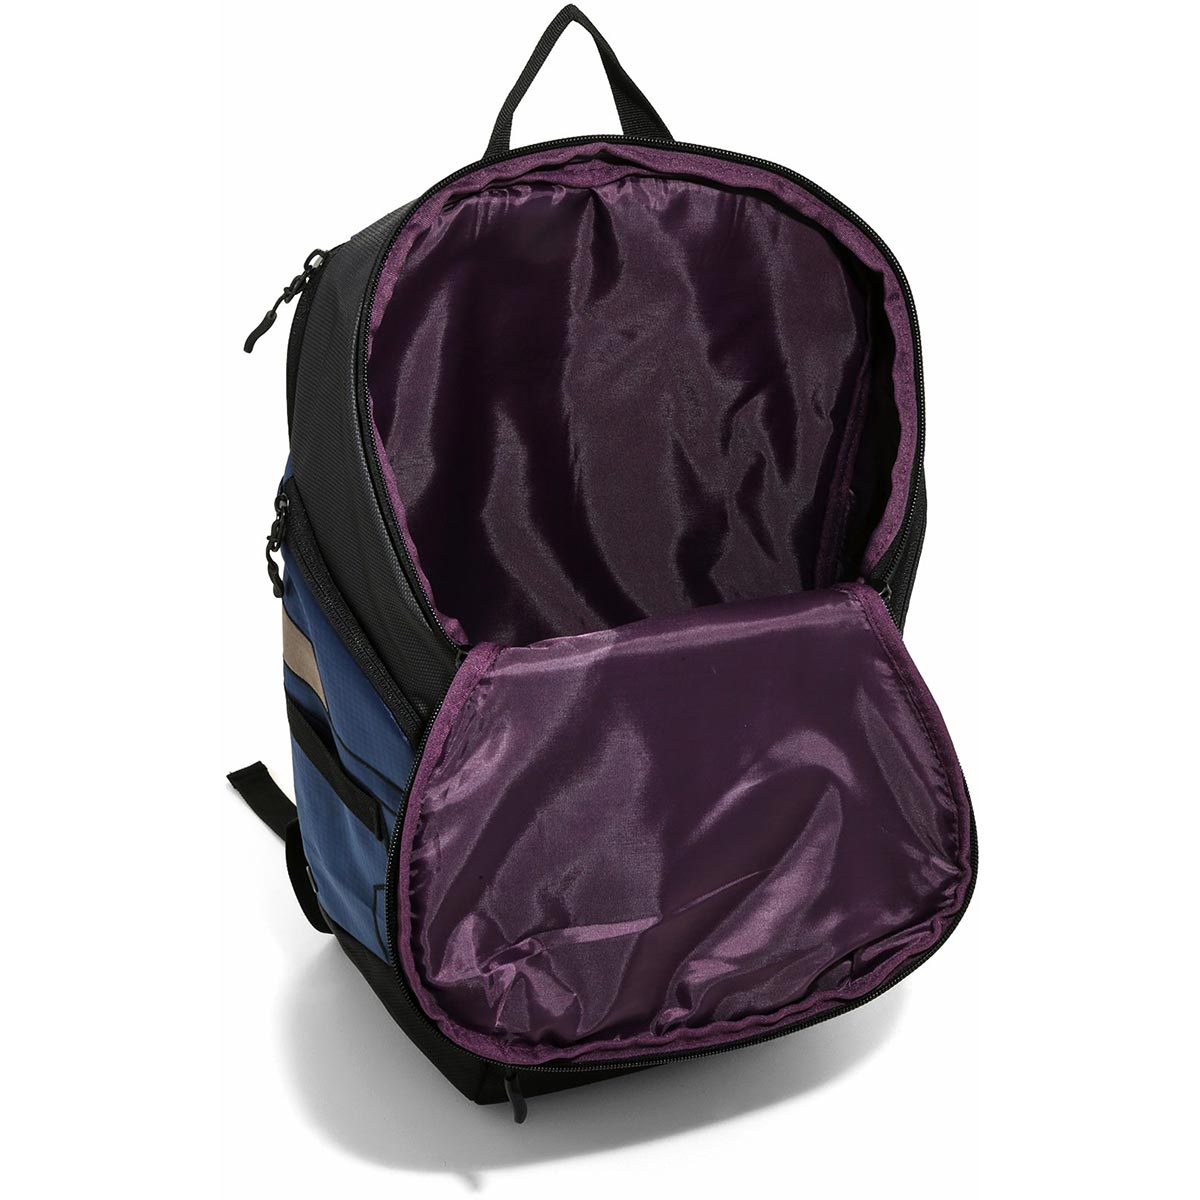 Kanhaha Anime Game Thanos Leisure Travel Trend Drawstring Backpack Bag :  Amazon.de: Sports & Outdoors